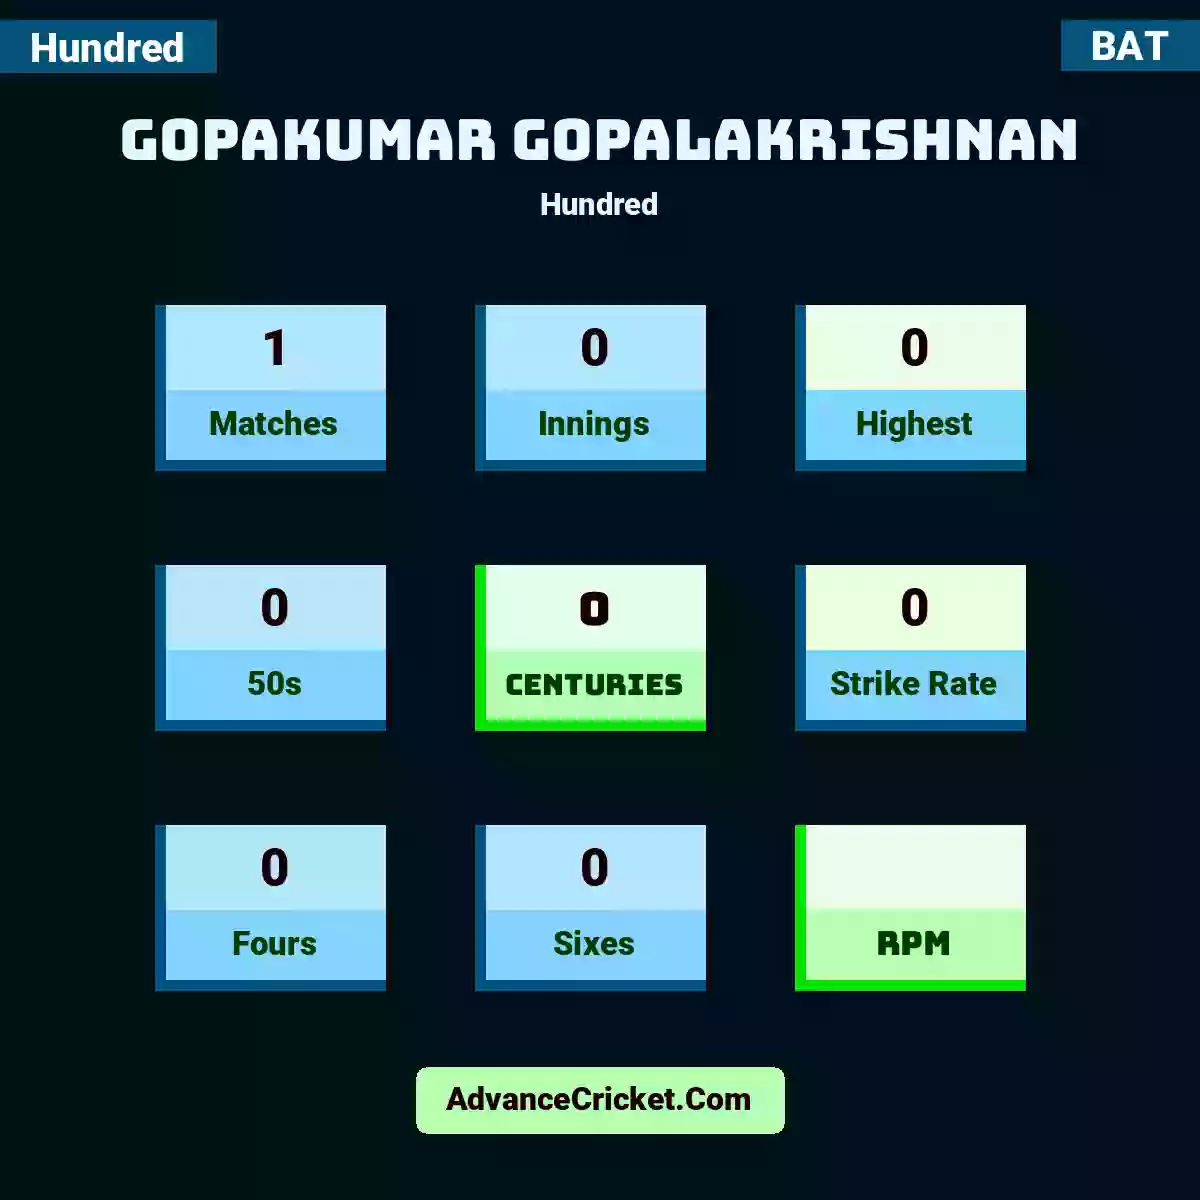 Gopakumar Gopalakrishnan Hundred , Gopakumar Gopalakrishnan played 1 matches, scored 0 runs as highest, 0 half-centuries, and 0 centuries, with a strike rate of 0. G.Gopalakrishnan hit 0 fours and 0 sixes.